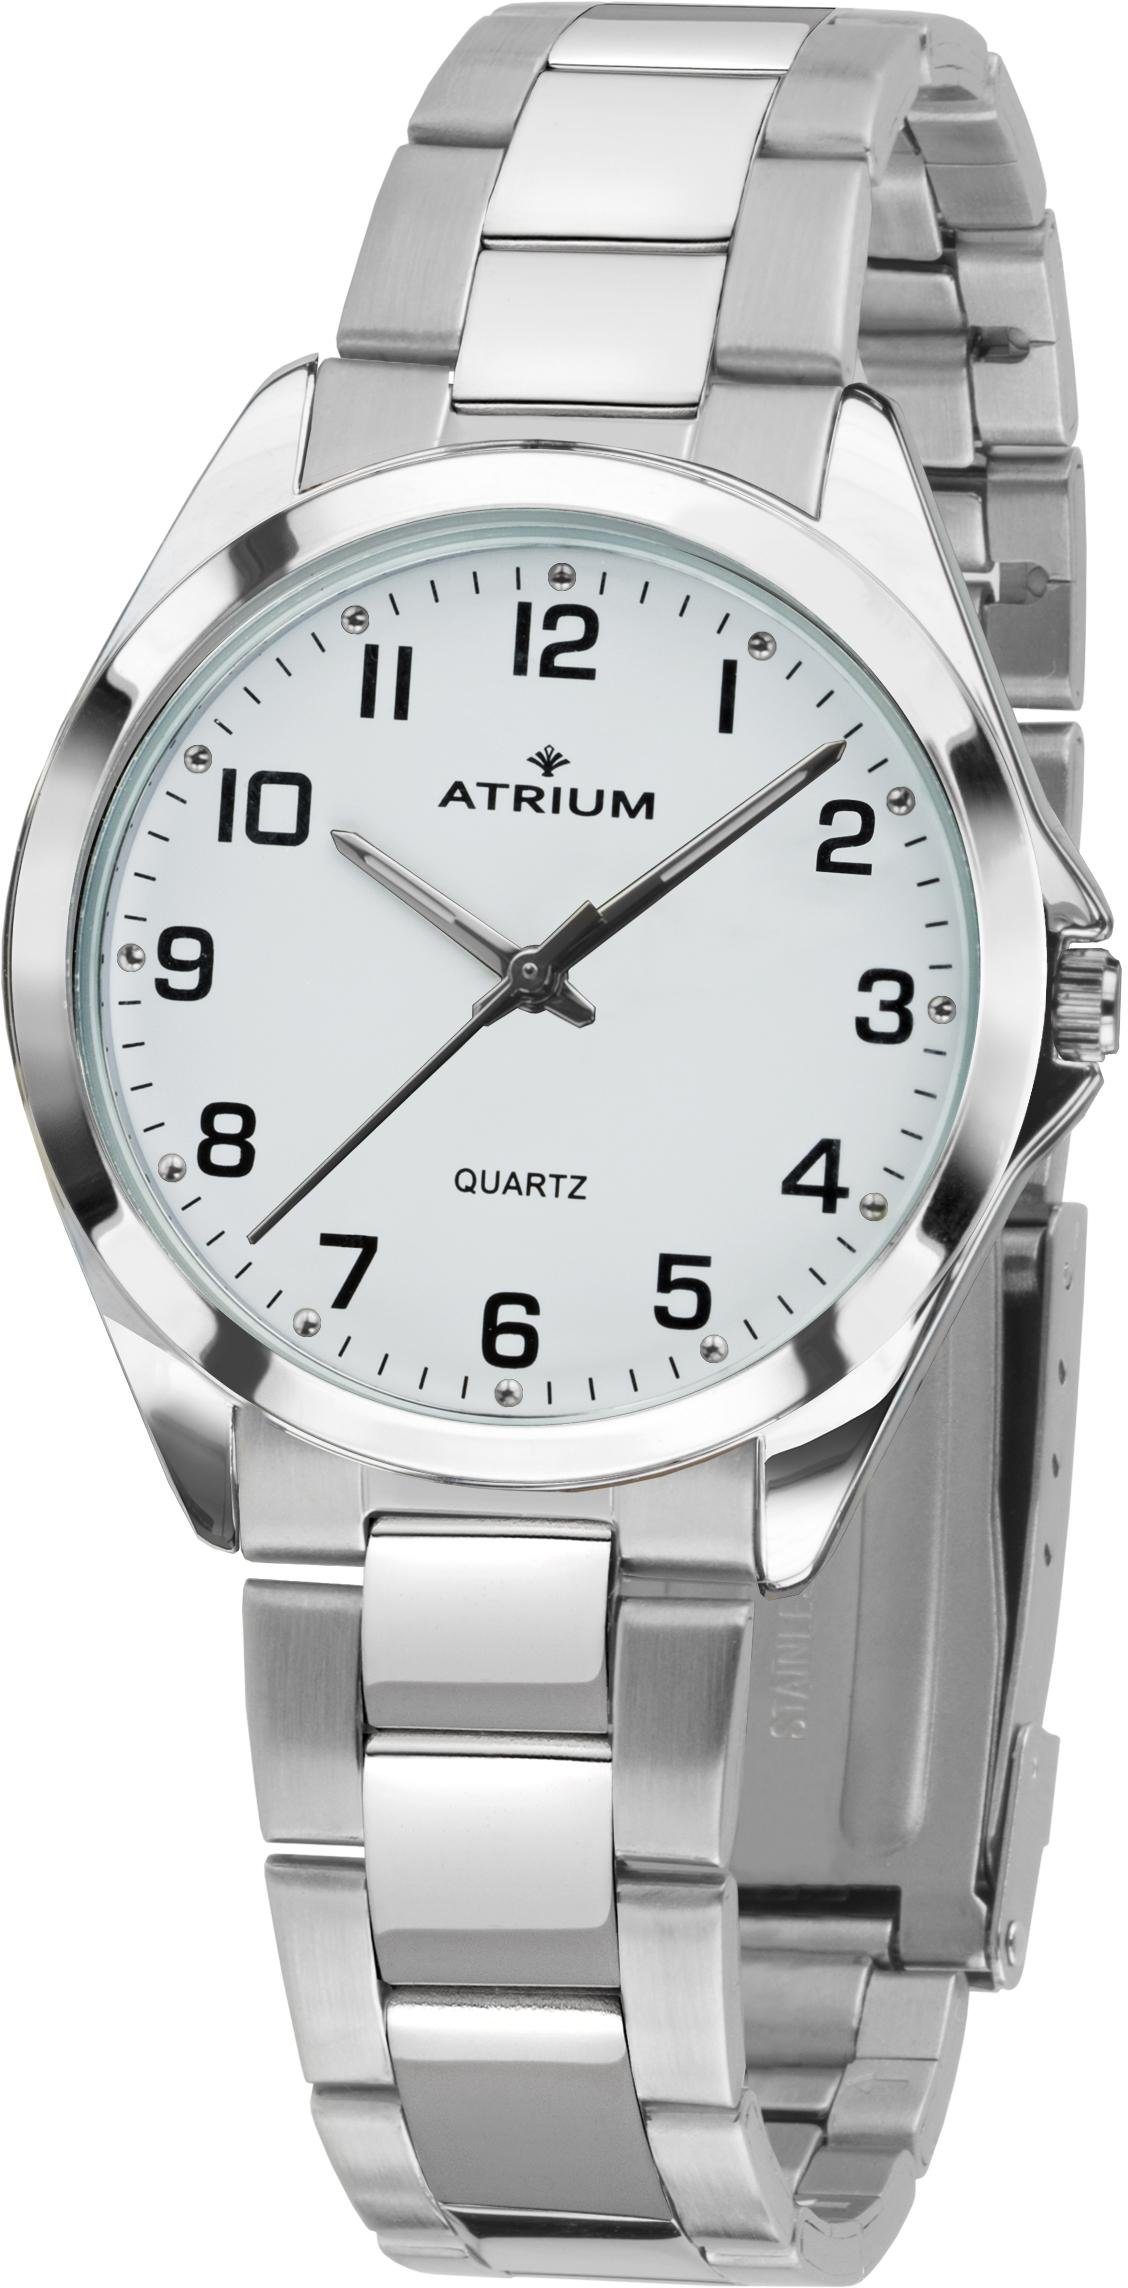 Atrium Quarzuhr A11-30, Armbanduhr, Damenuhr, Leuchtzeiger